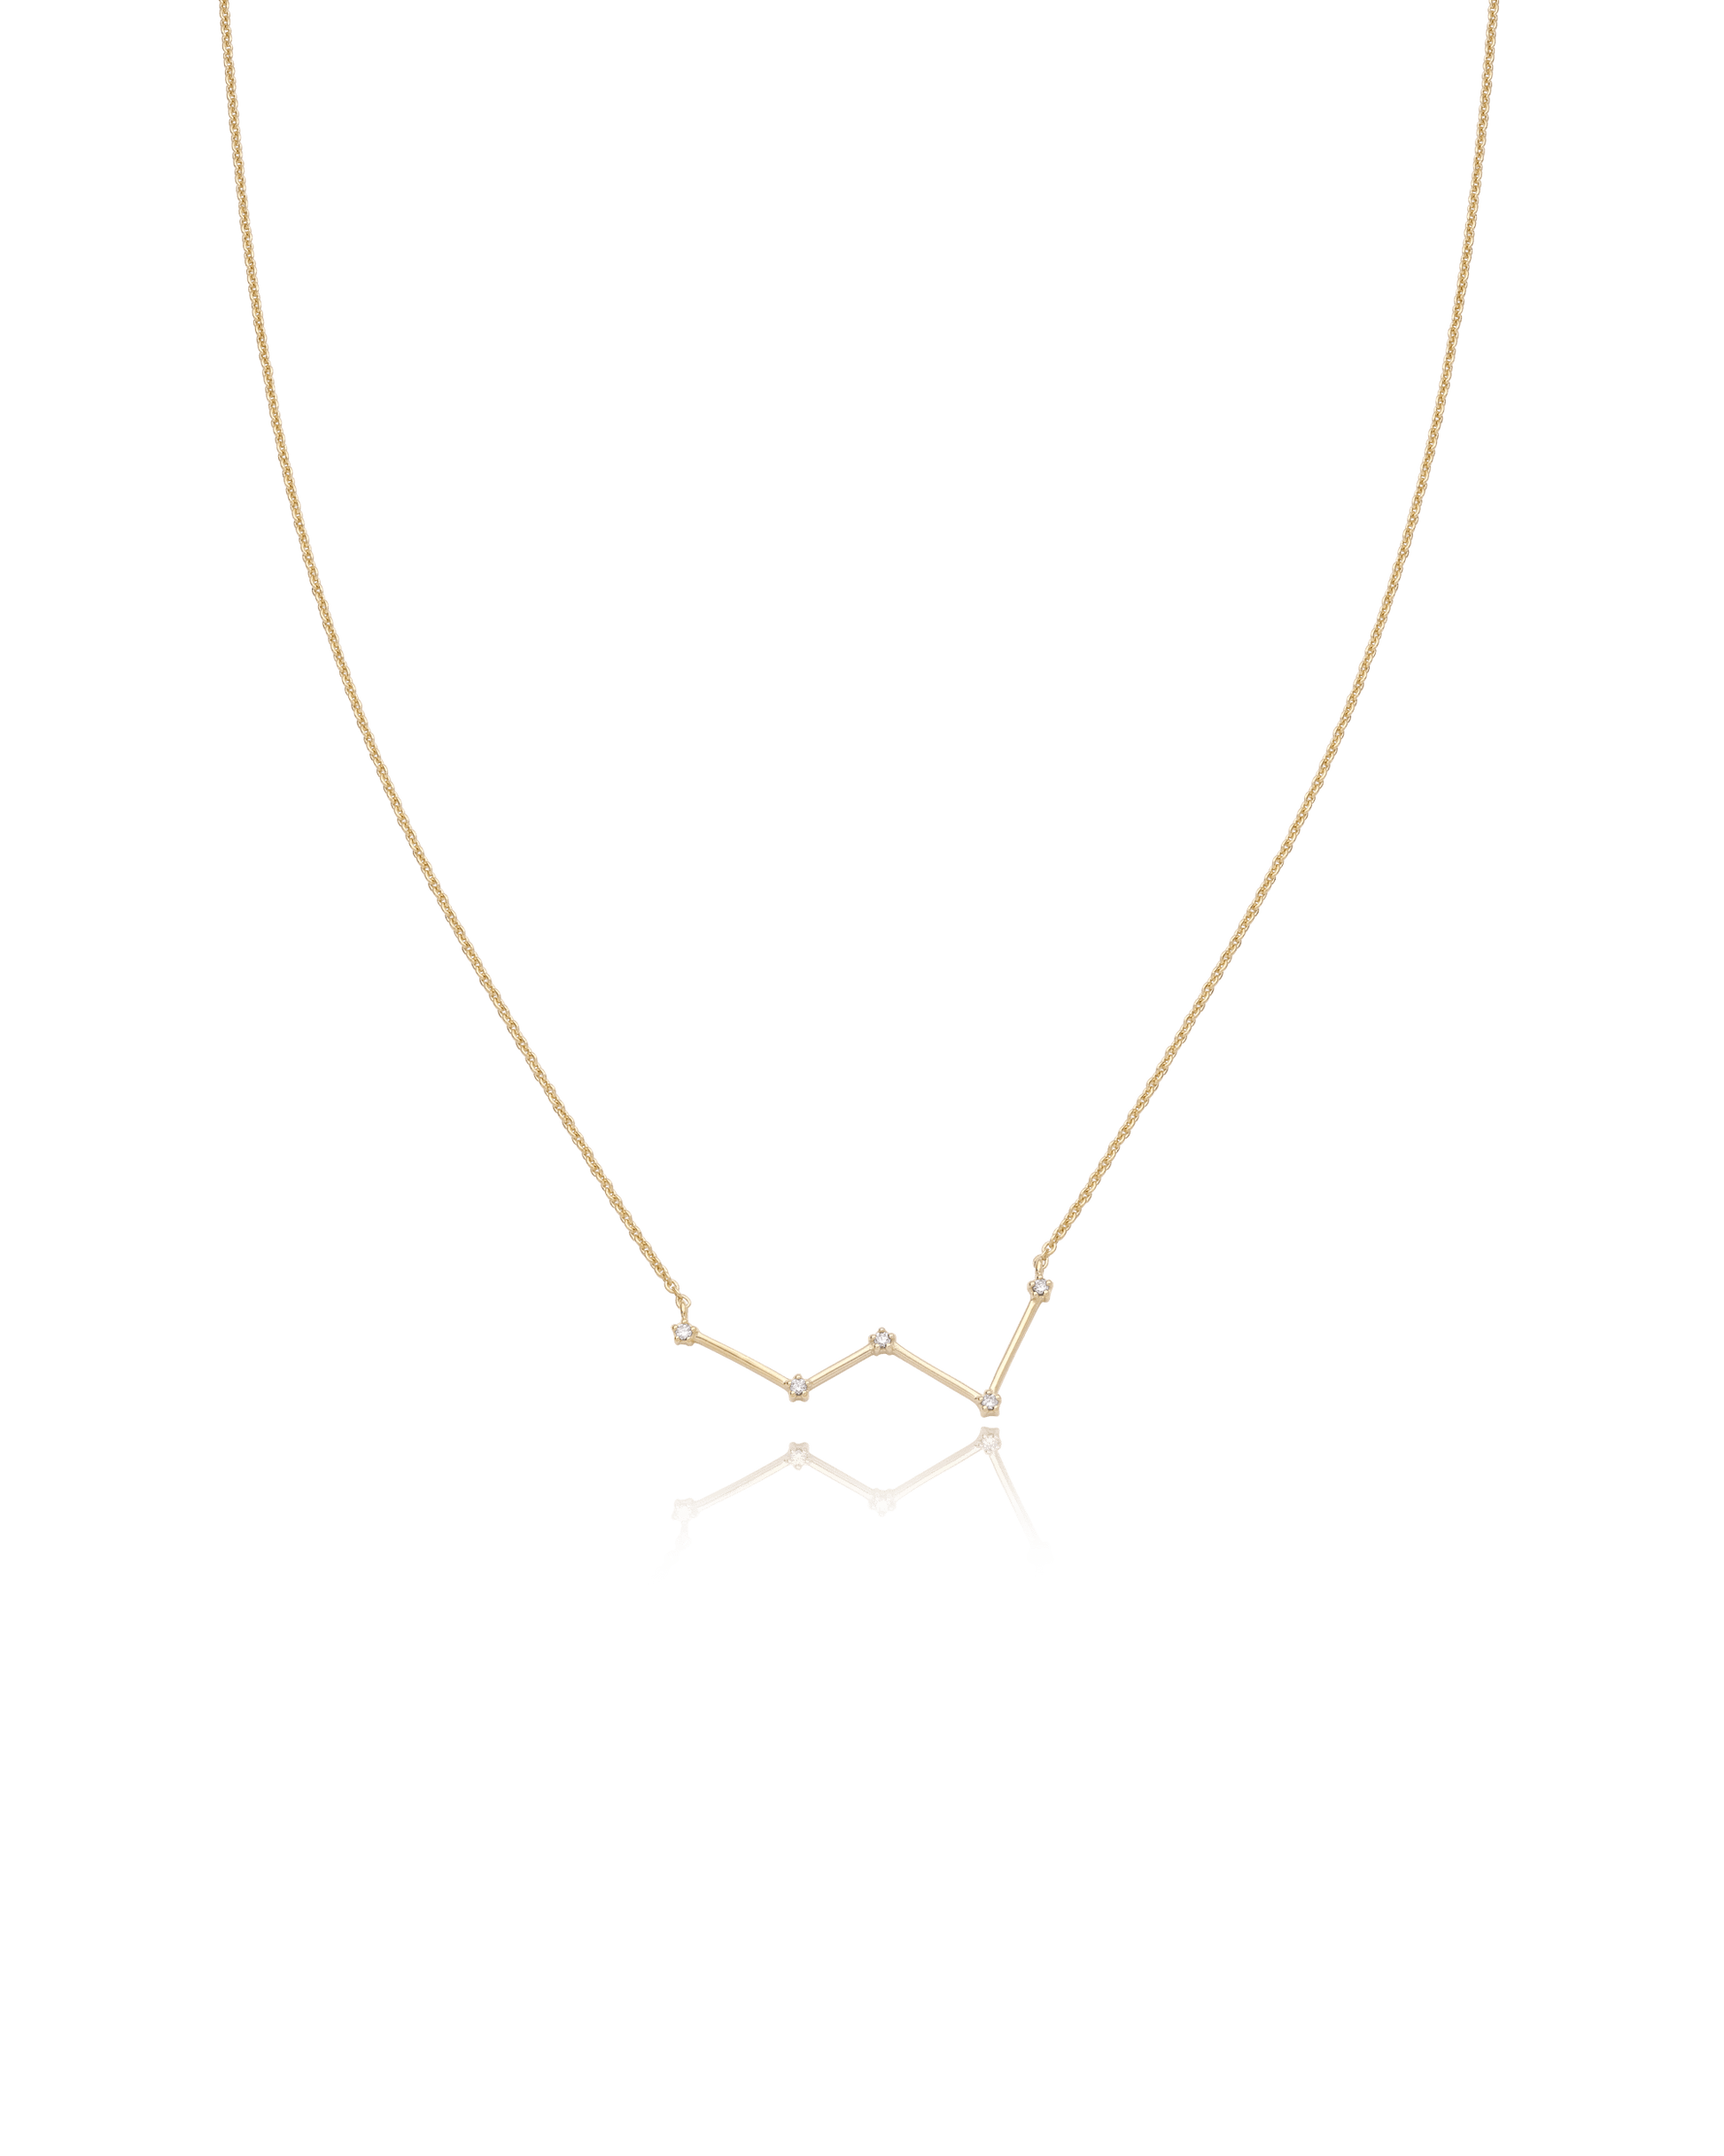 Ursa Major Constellation Necklace - 18K Gold Vermeil Necklaces magal-dev Cassiopeia 16" 